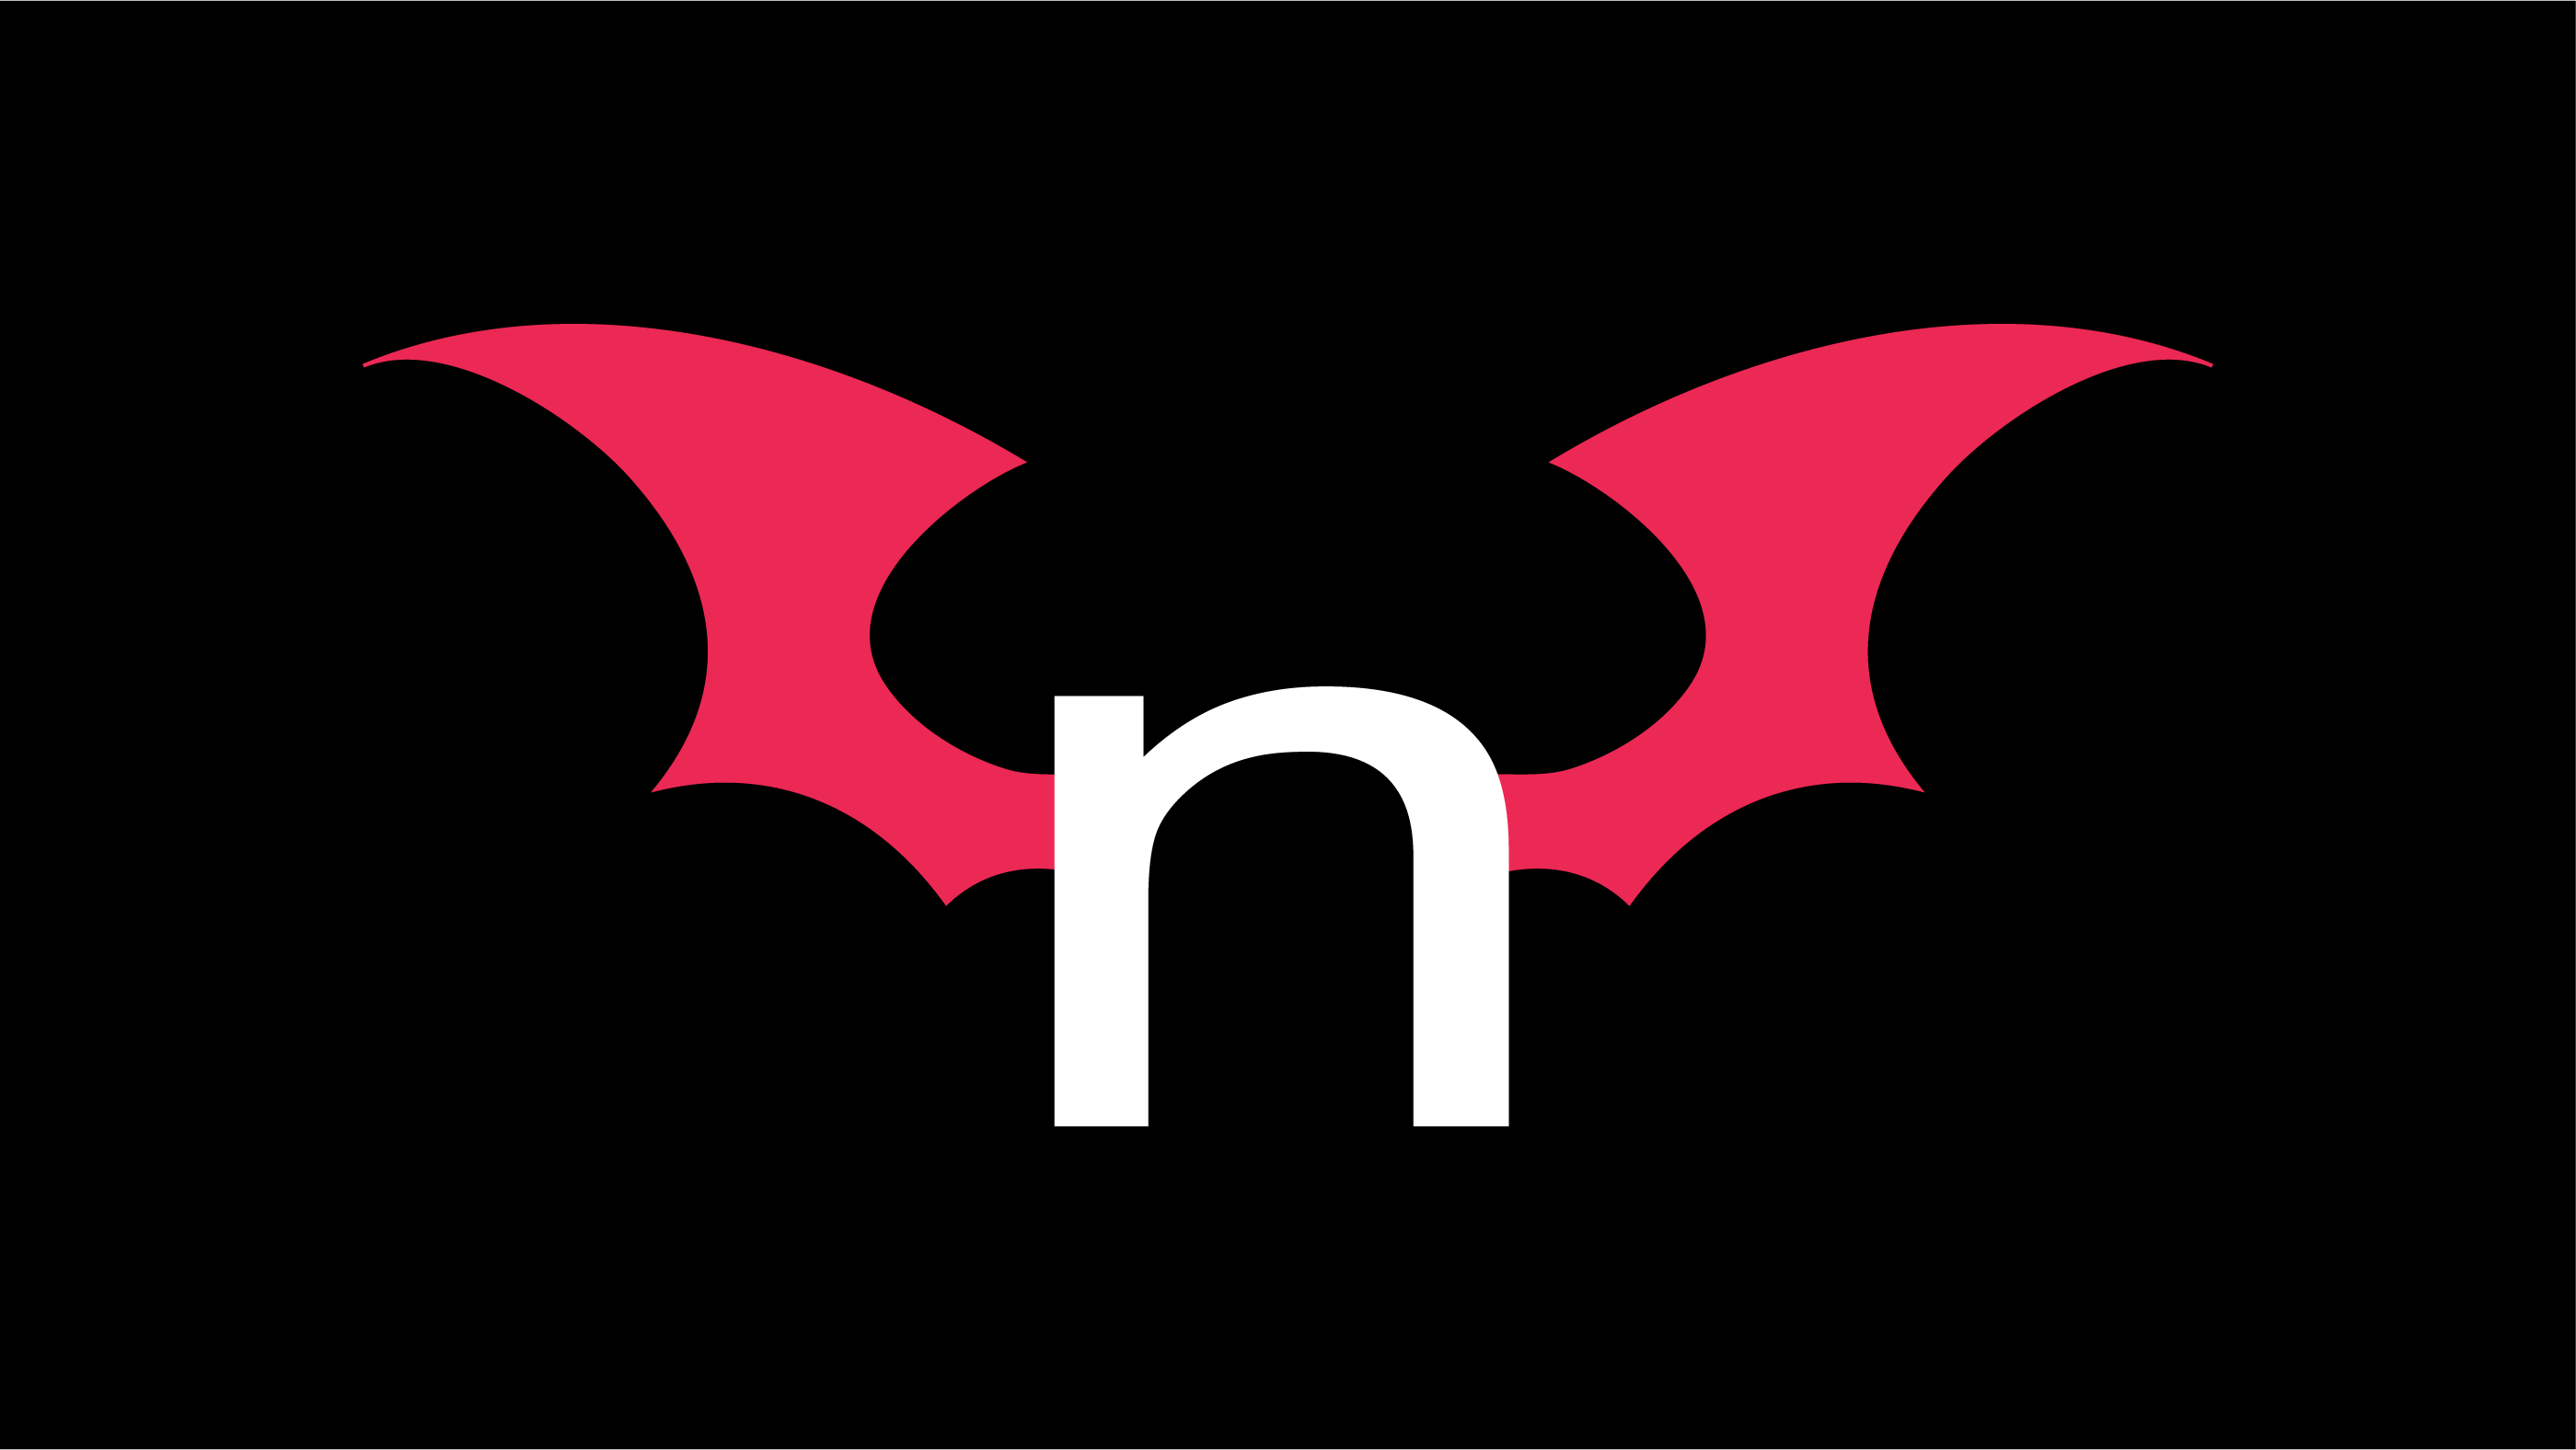 Nhentai.net logo